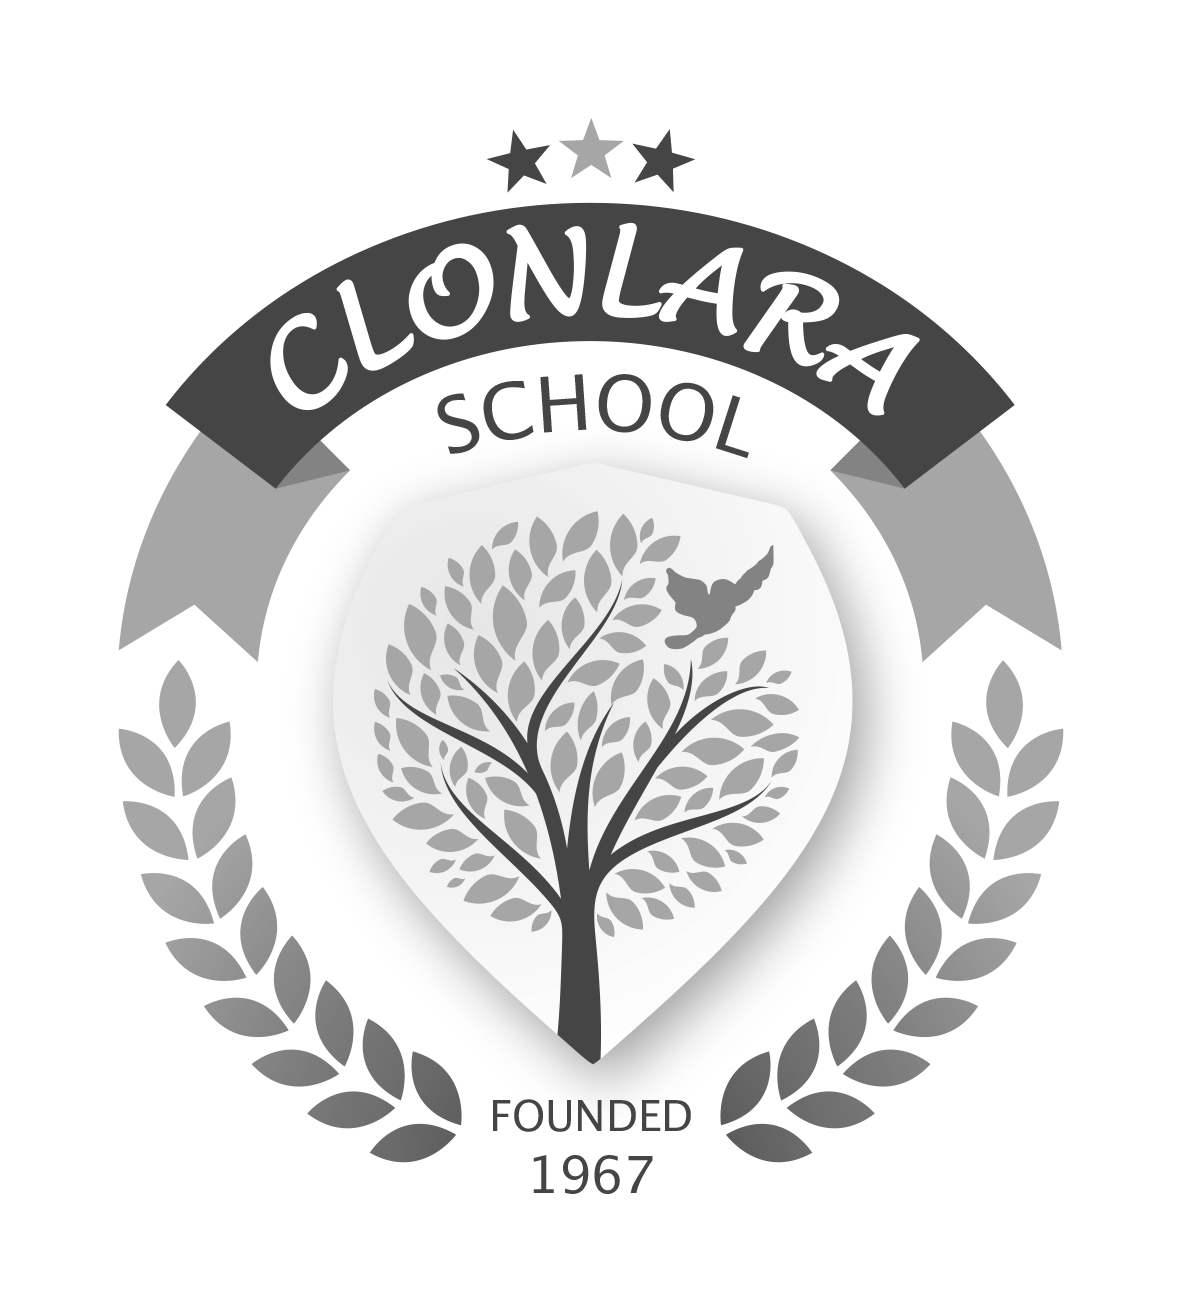 Clonlara School: Global Proof That Learning Can Ta